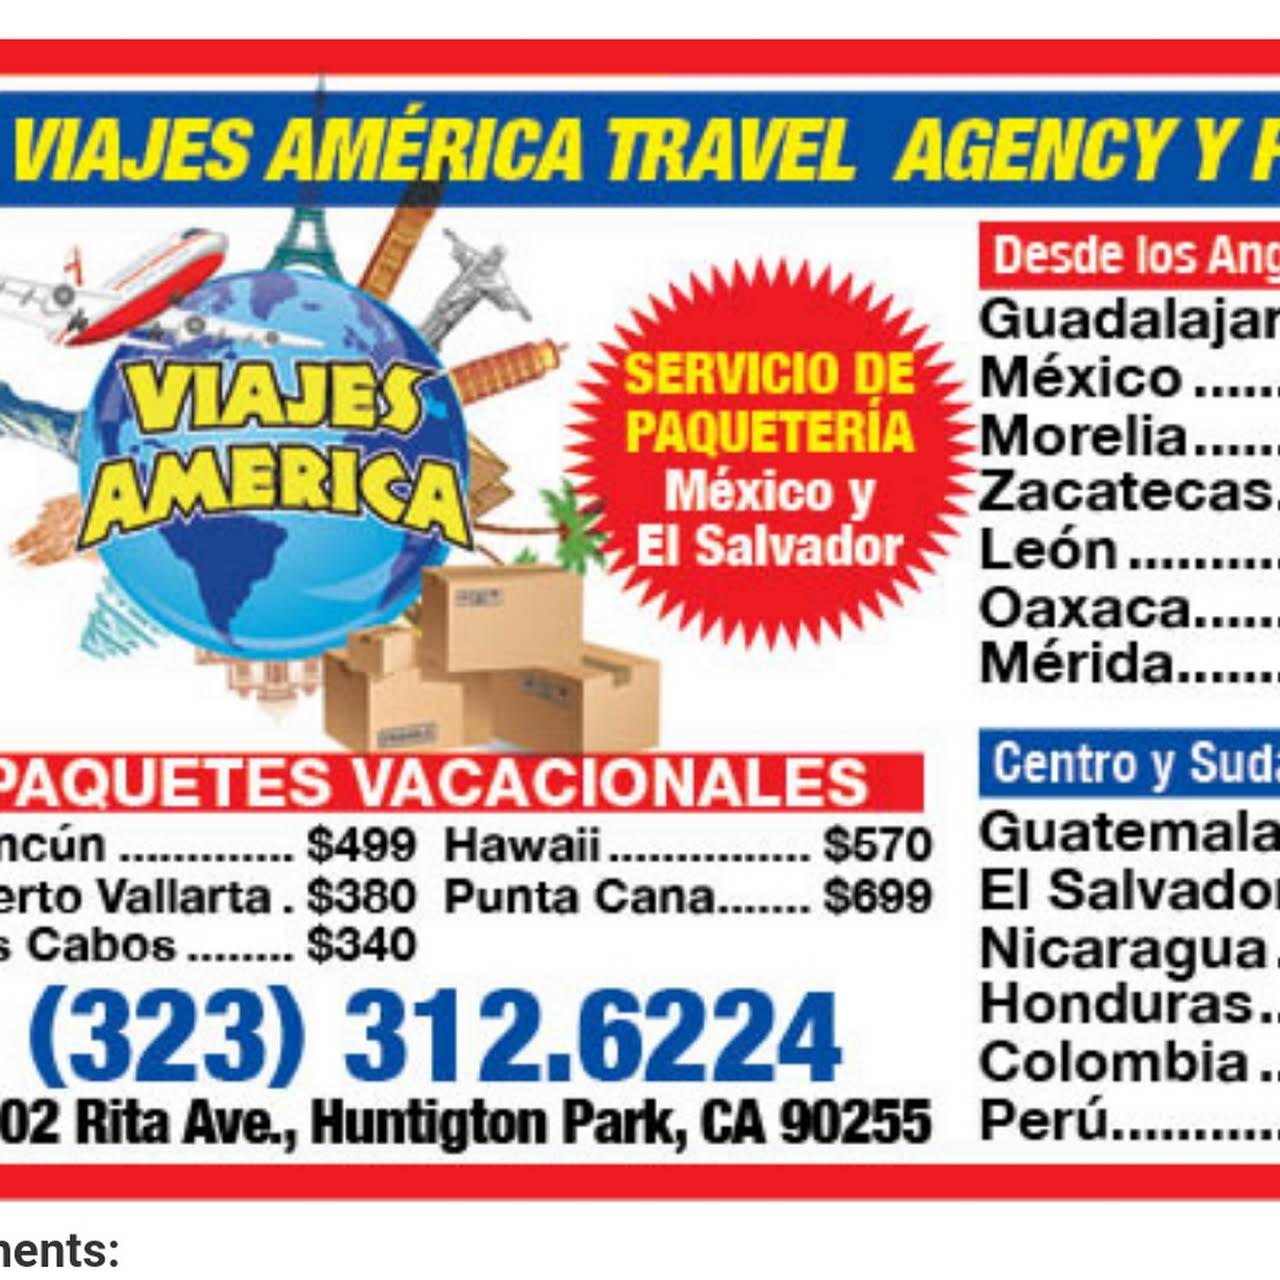 VIAJES AMERICA TRAVEL AGENCY PAQUETERIA - Travel Agency Huntington Park